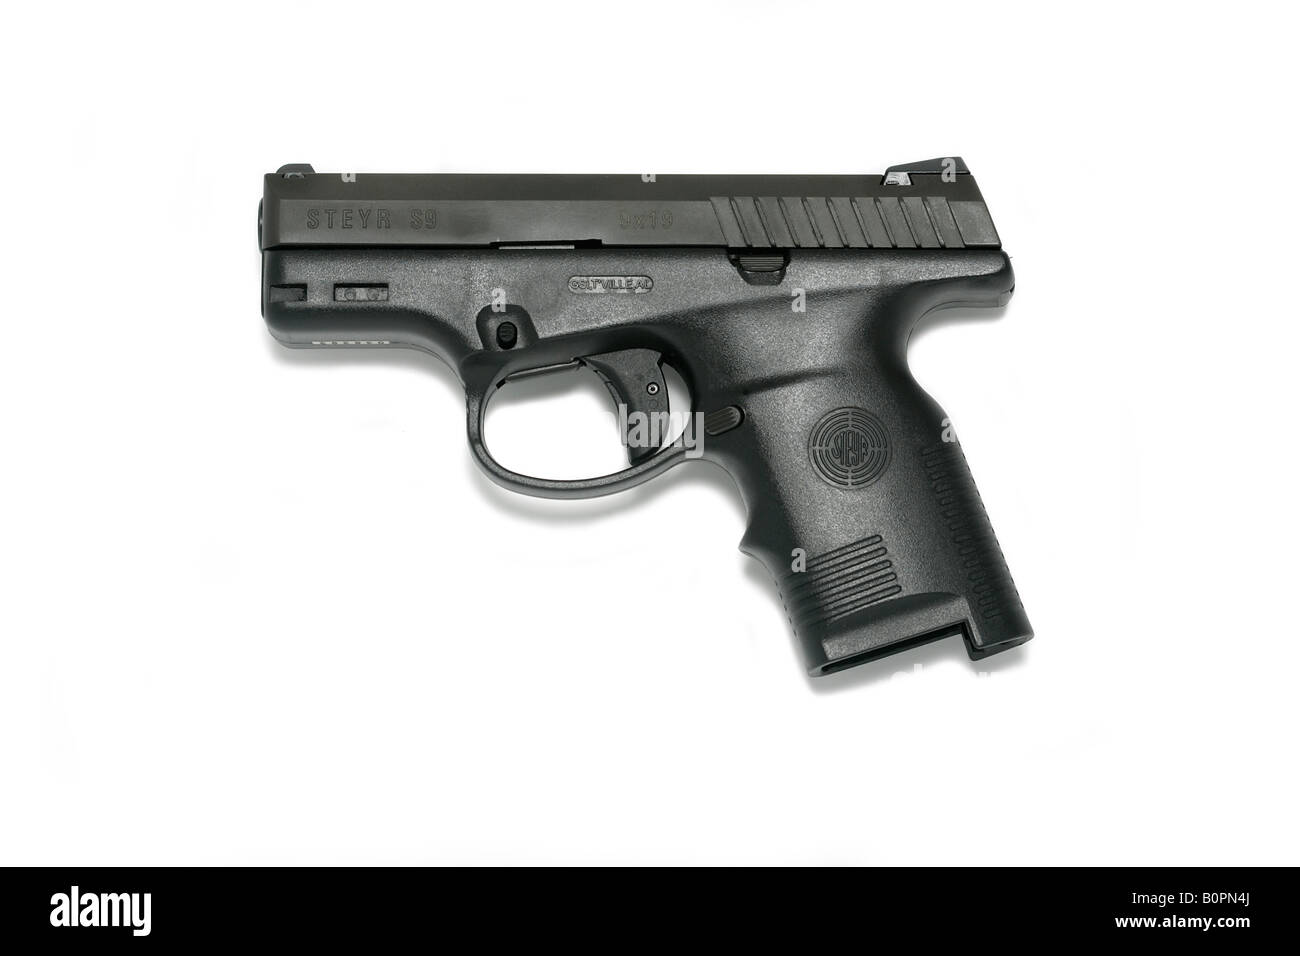 STEYR S9 handgun hand gun pistol Stock Photo